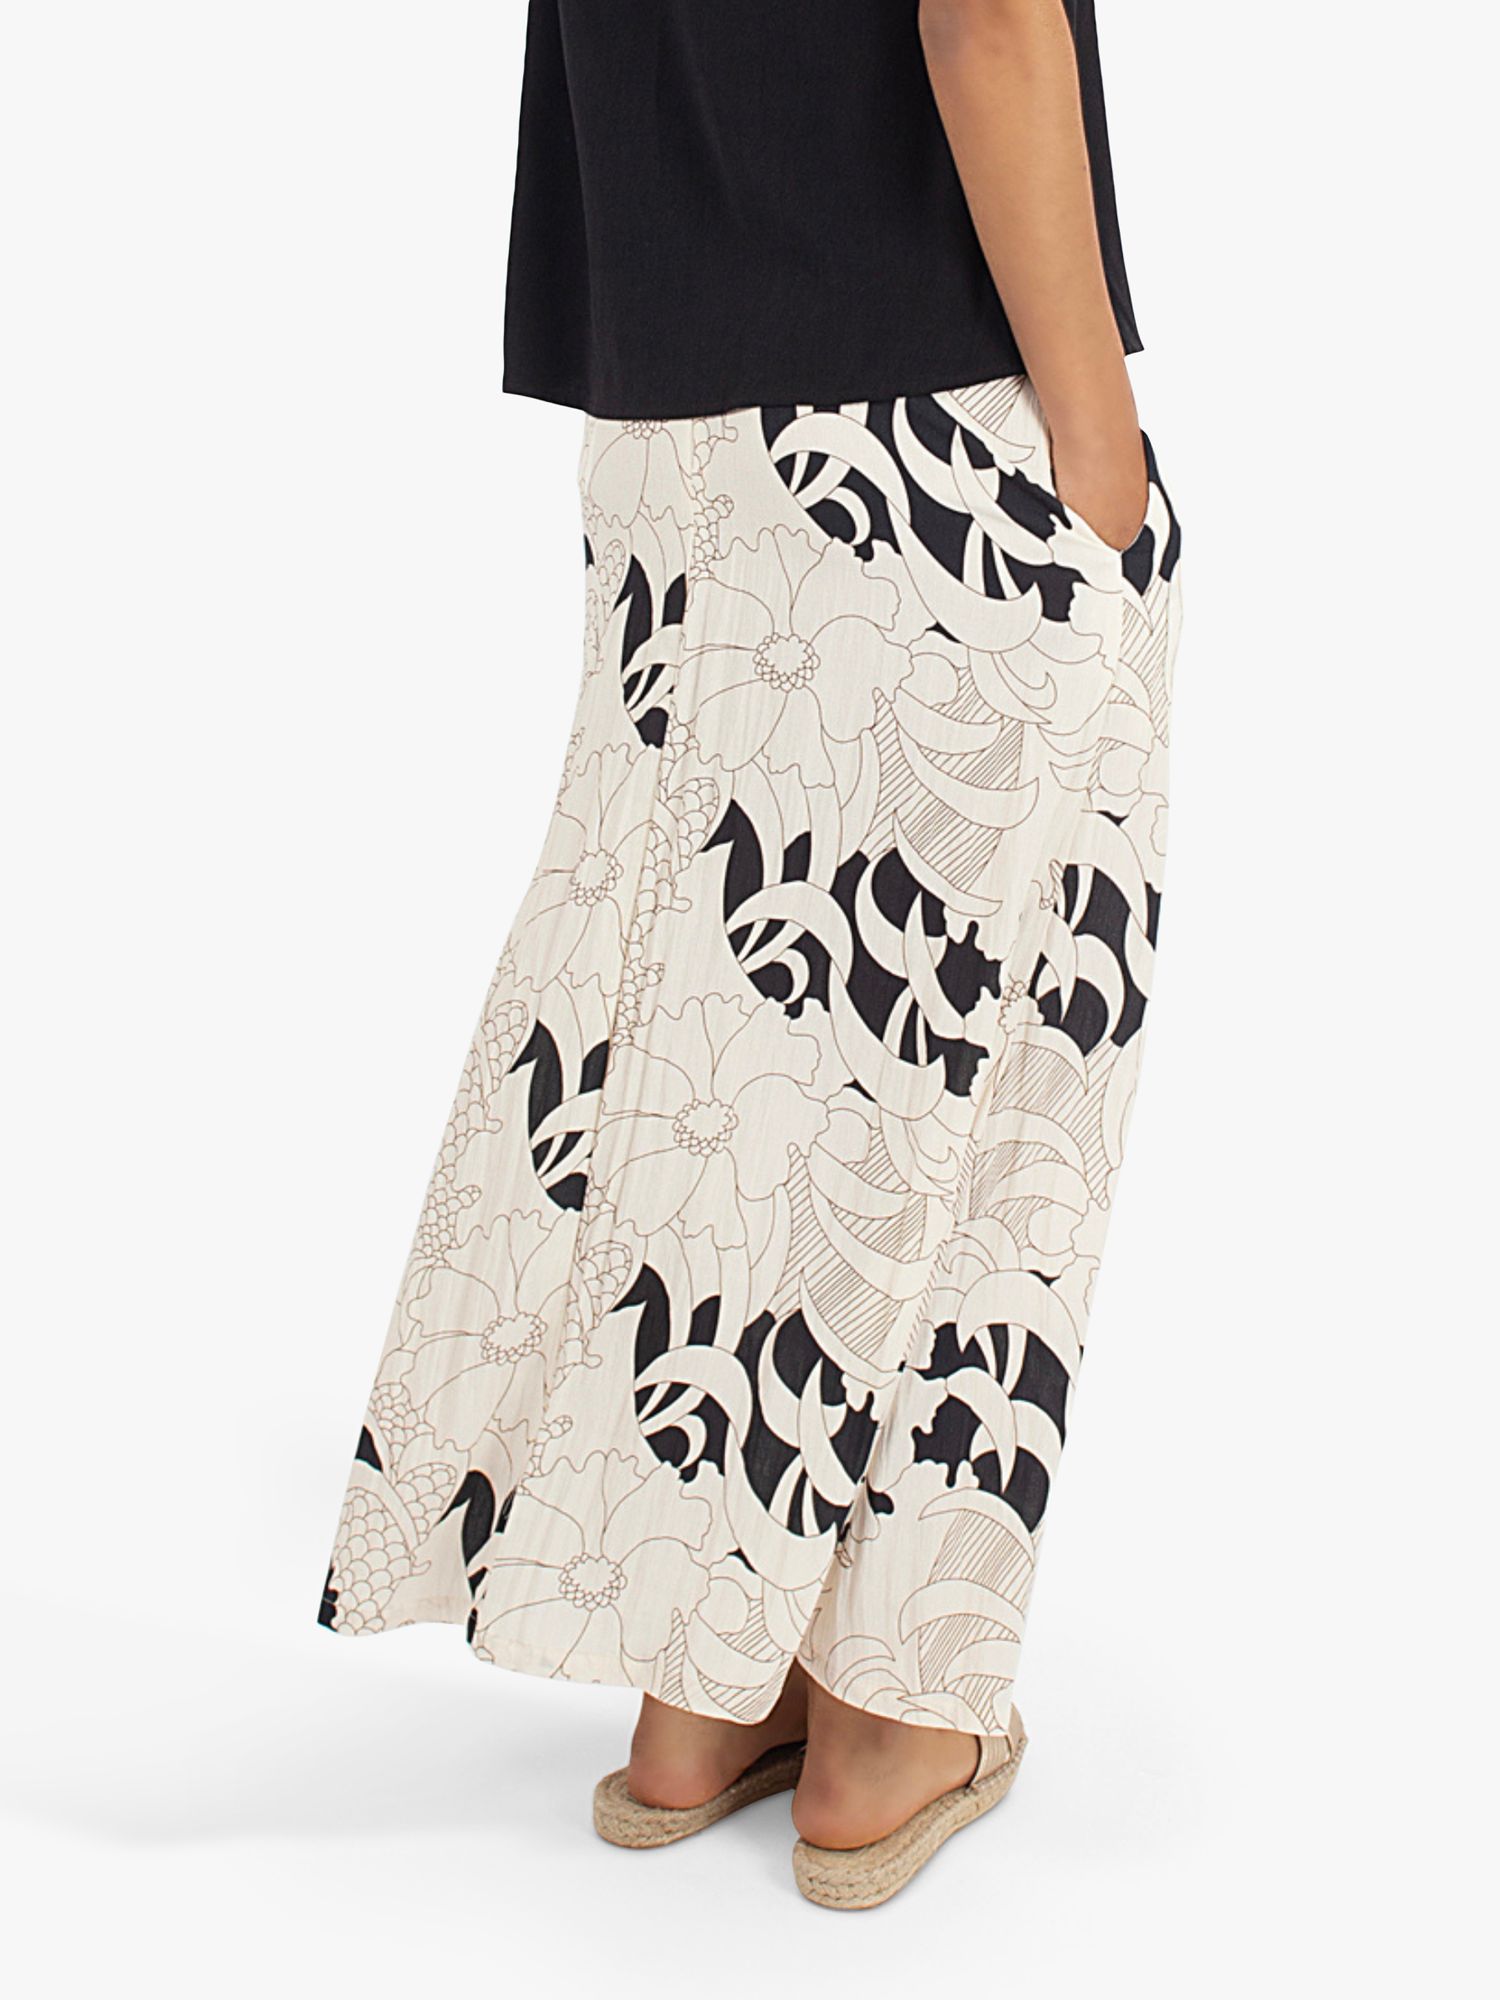 Traffic People Deanie Loomis Mia Linen Blend Maxi Skirt, Black/White, XS